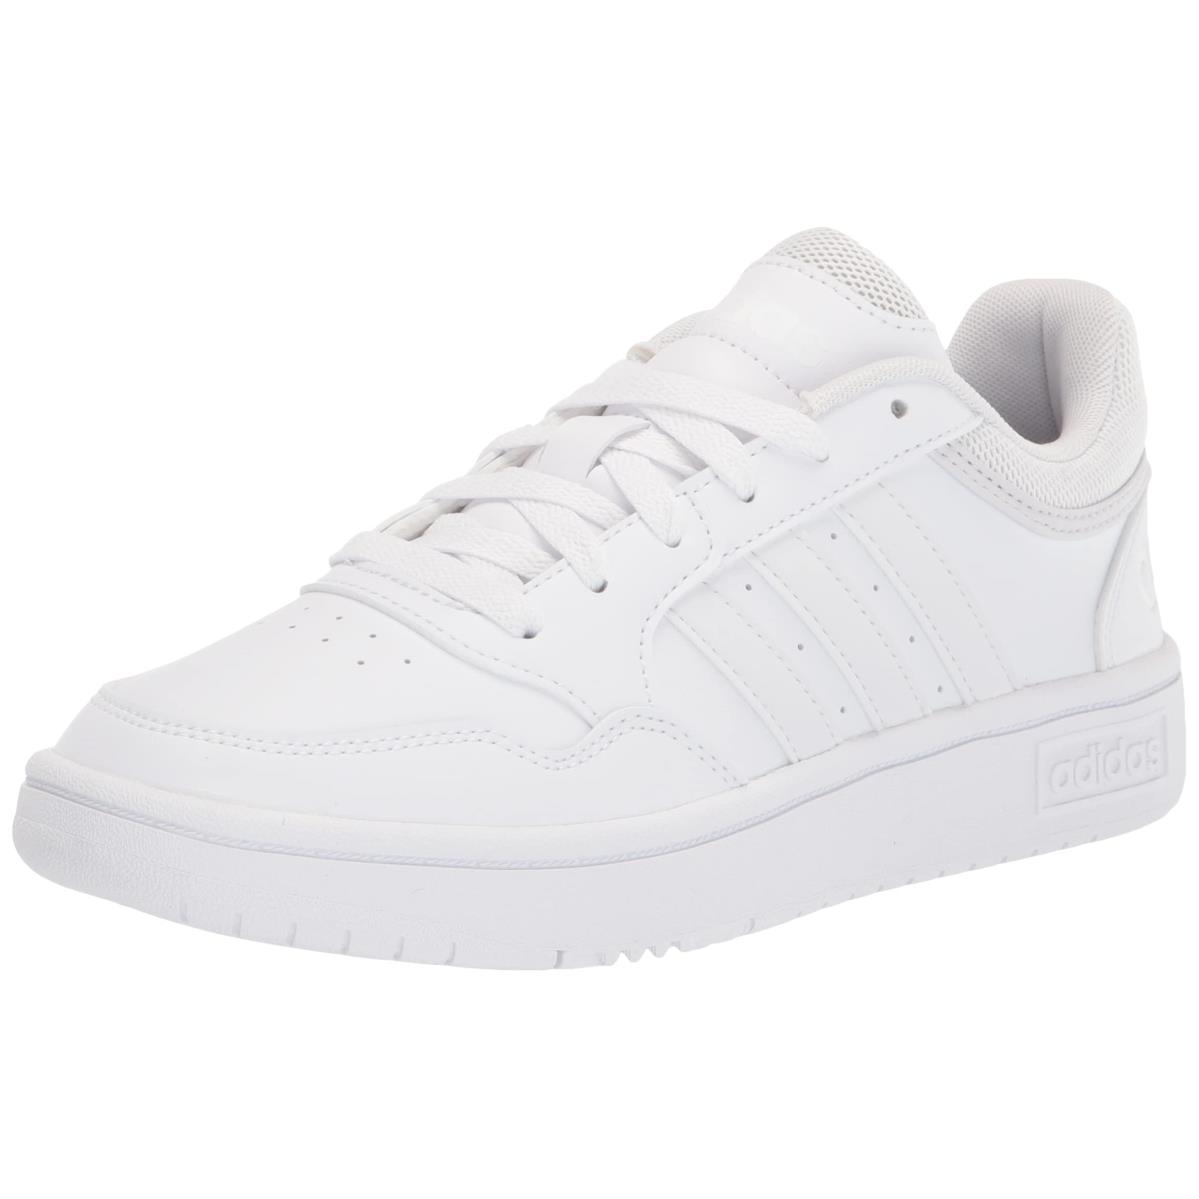 Adidas Men`s Hoops 3.0 Basketball Shoe White/White/Dash Grey